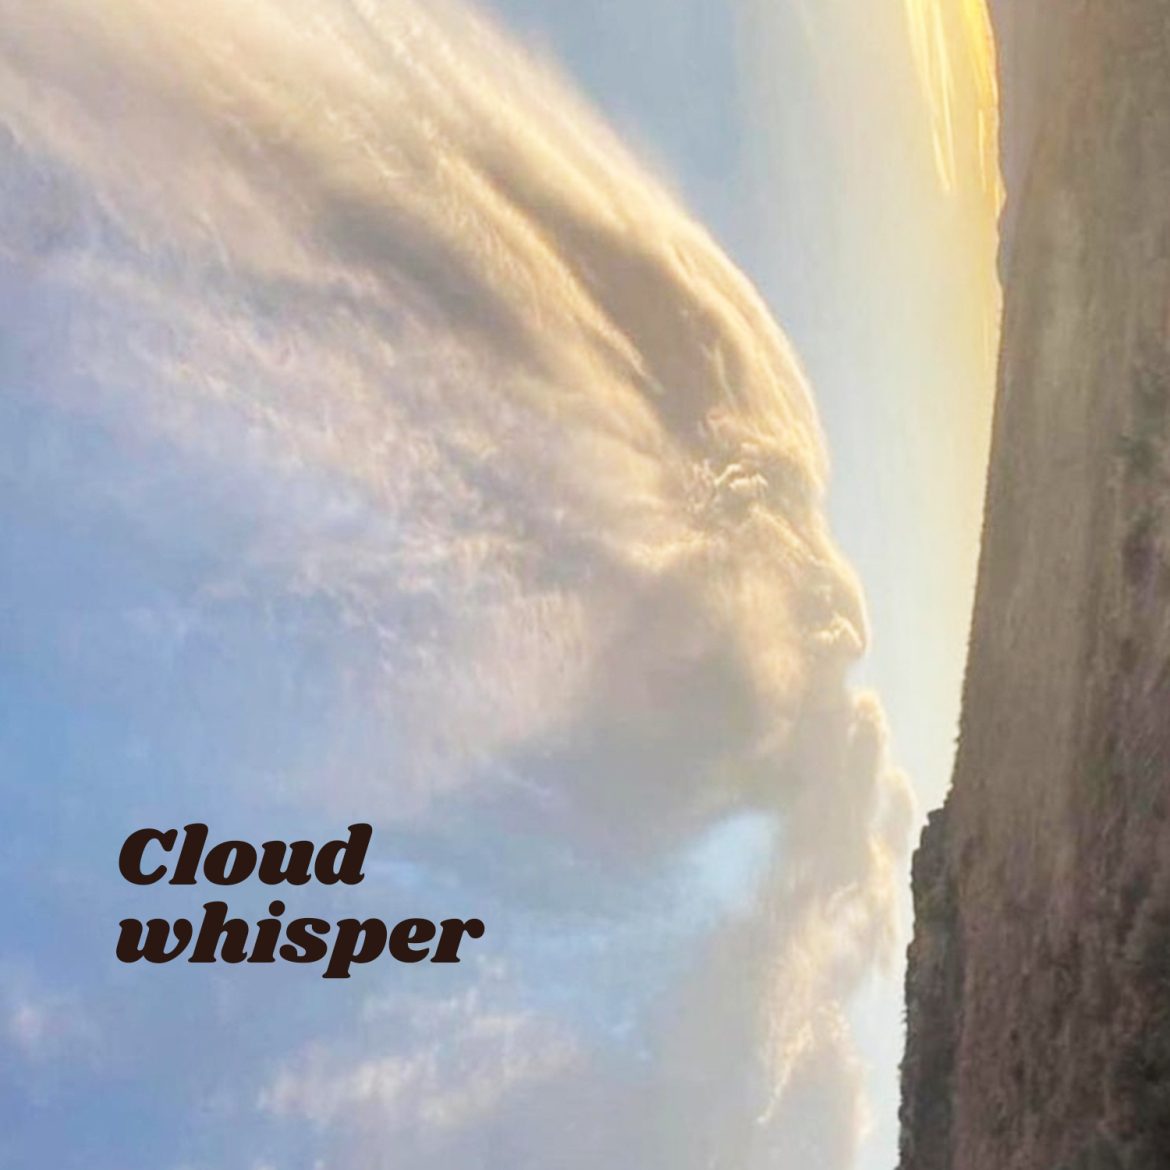 Cloud whisper